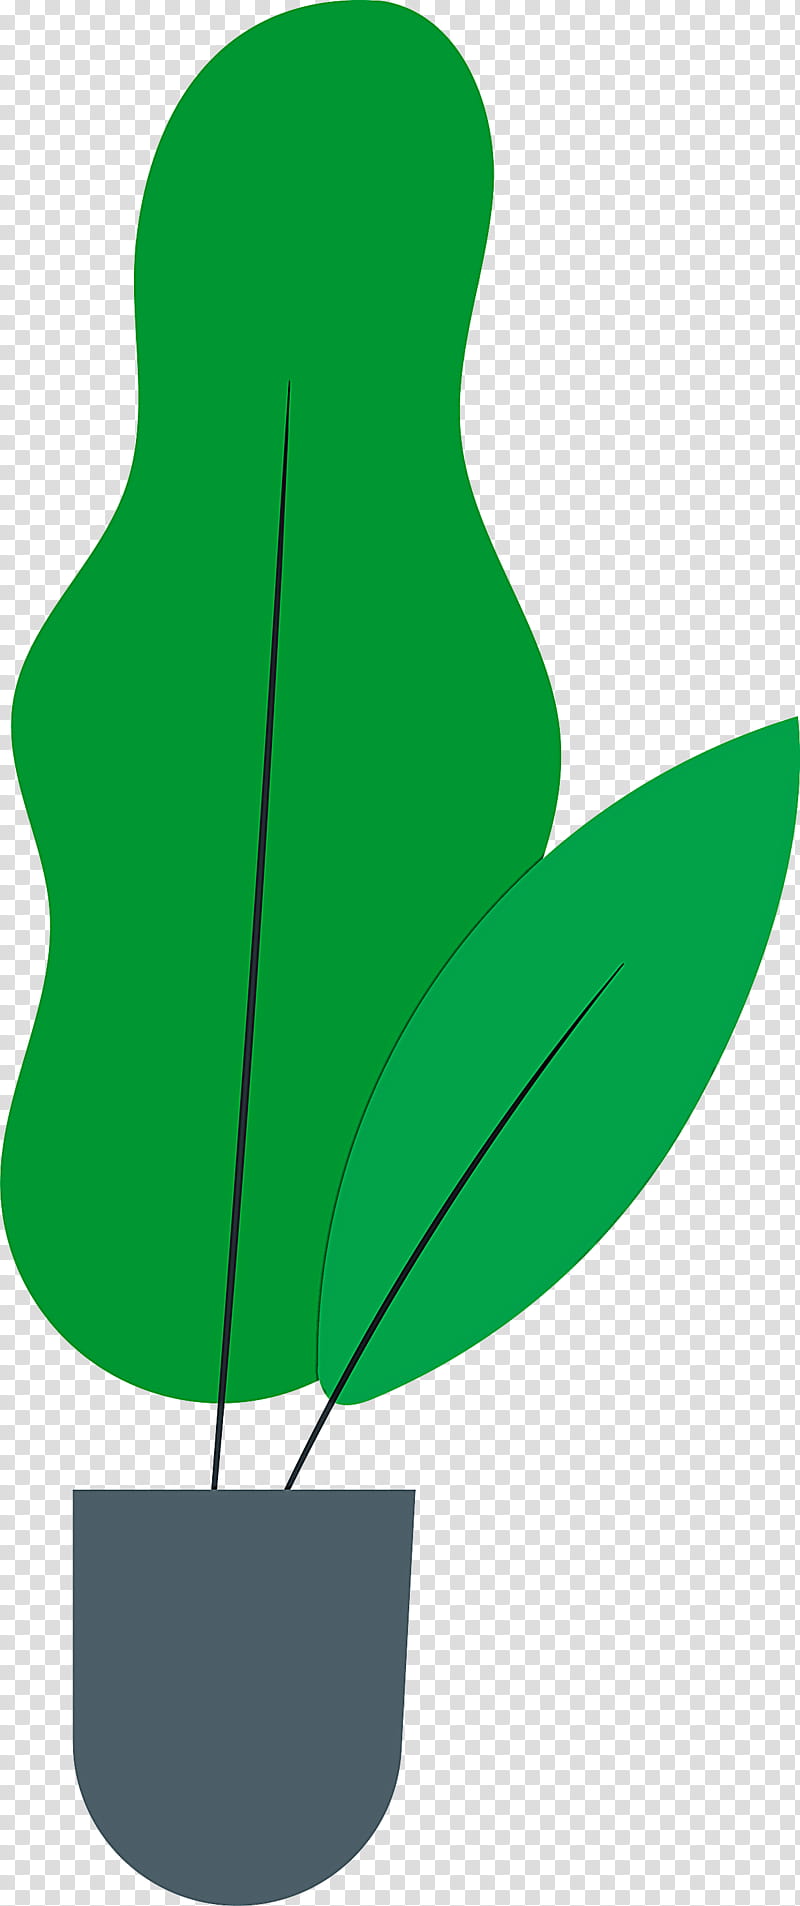 leaf plant stem flower branch petal, Tulip, Tree, Green, Fig Trees, Plant Structure, Plants, Biology transparent background PNG clipart